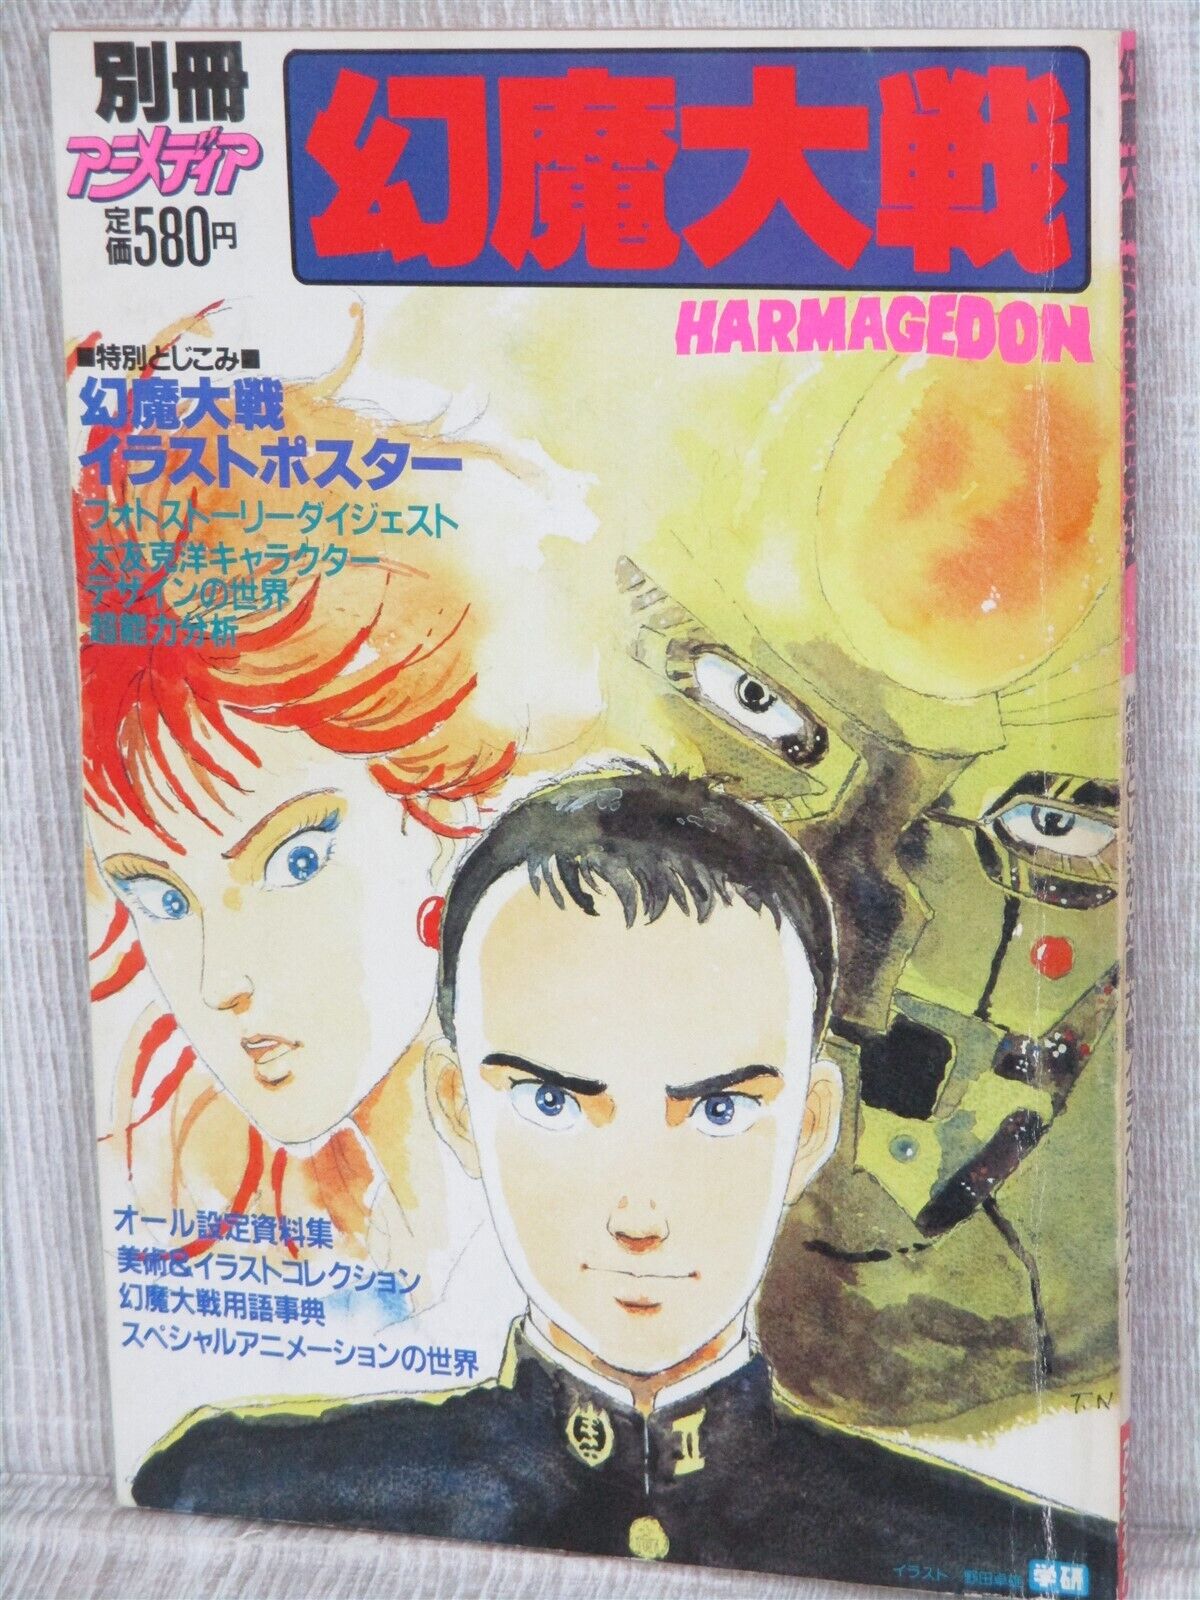 GENMA TAISEN Harumagedon w/Poster Anime Art Fan Book KATSUHIRO OTOMO 1983 GK